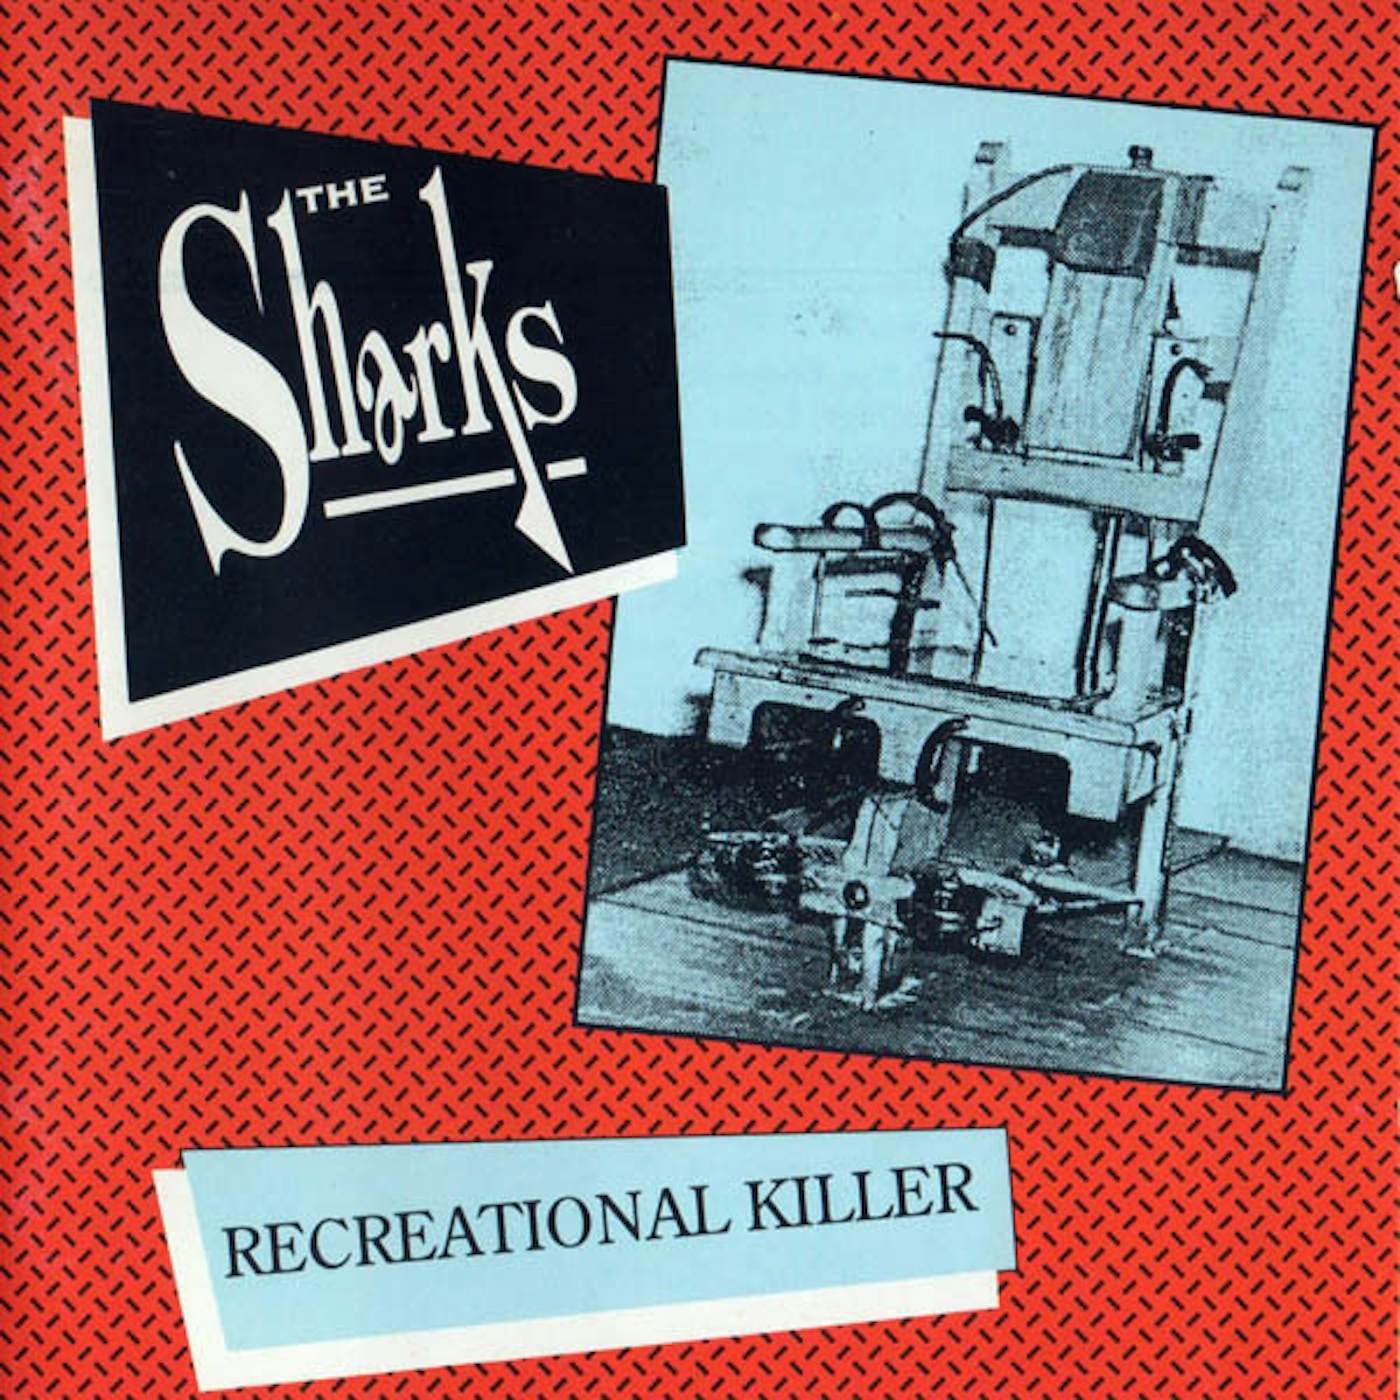 Sharks Recreational Killer Vinyl Record